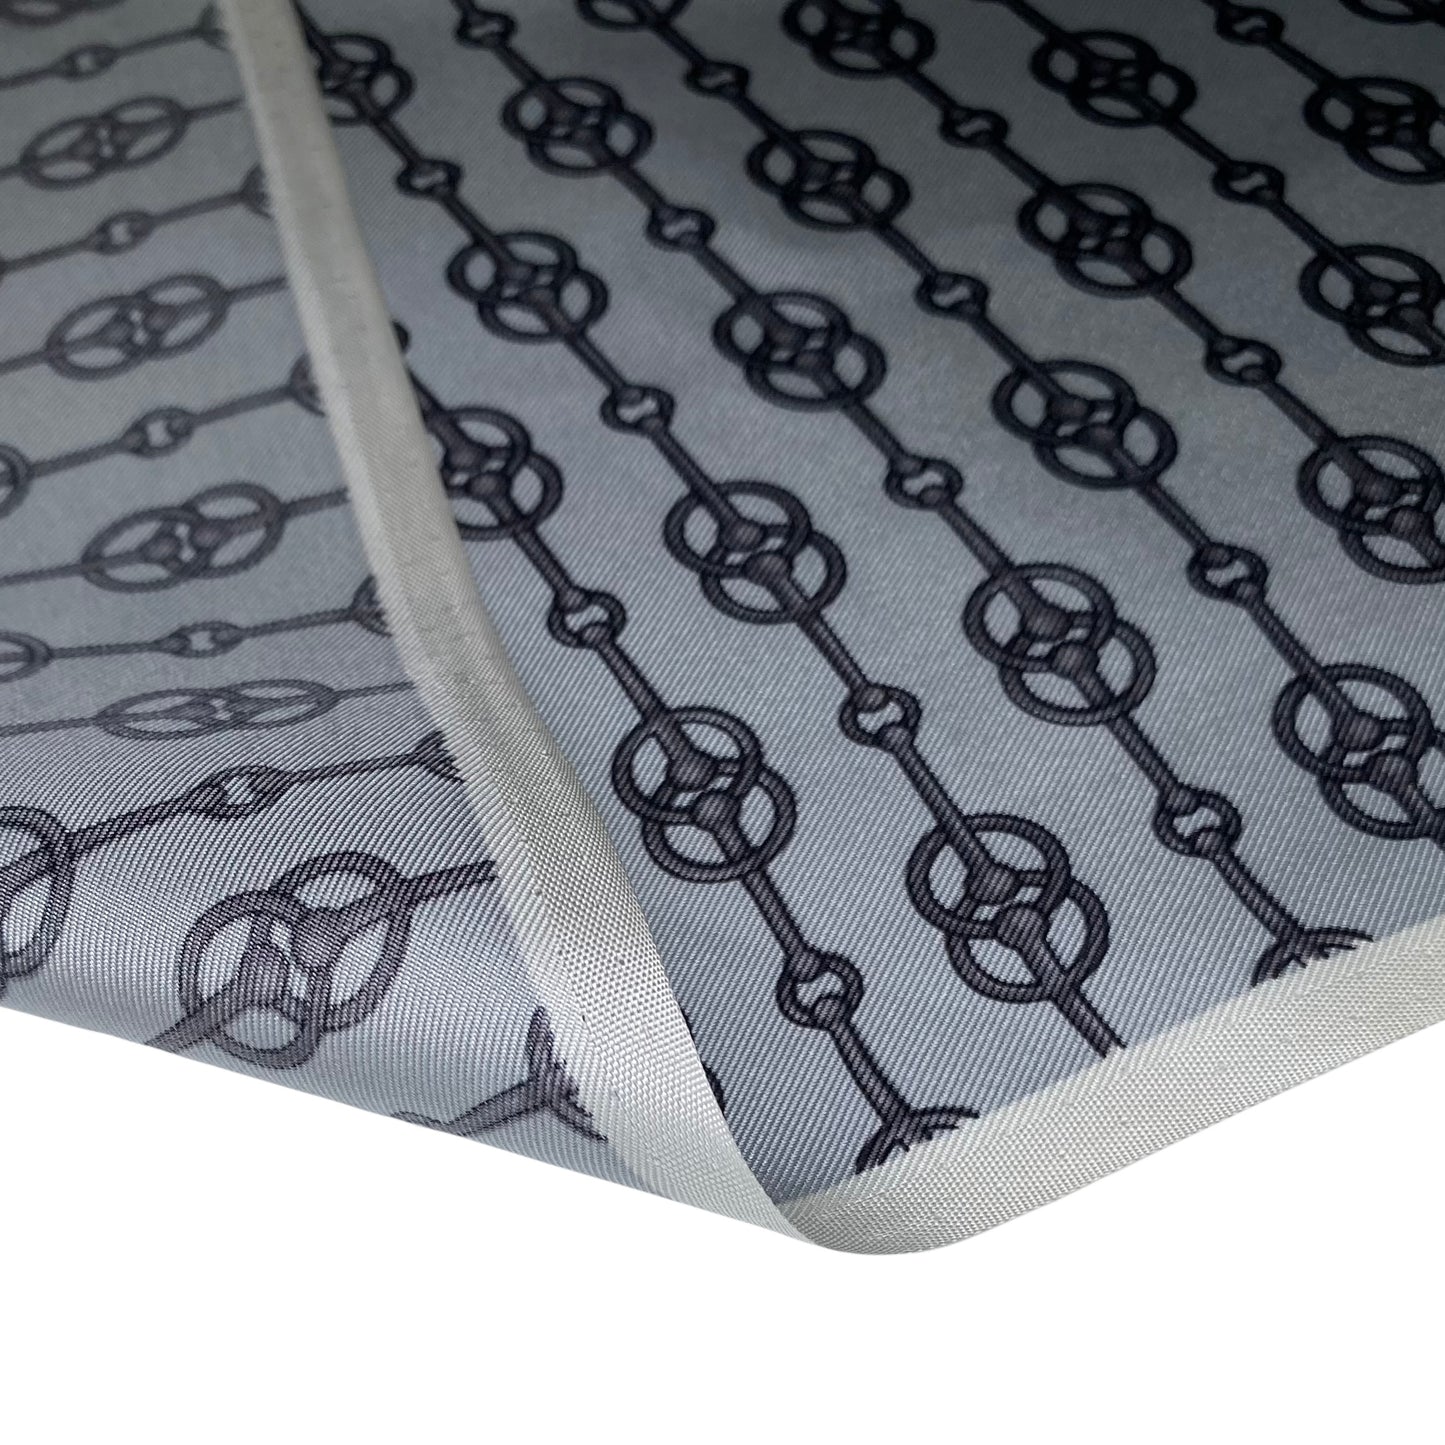 Printed Silk Twill - Chain Print - Silver/Black